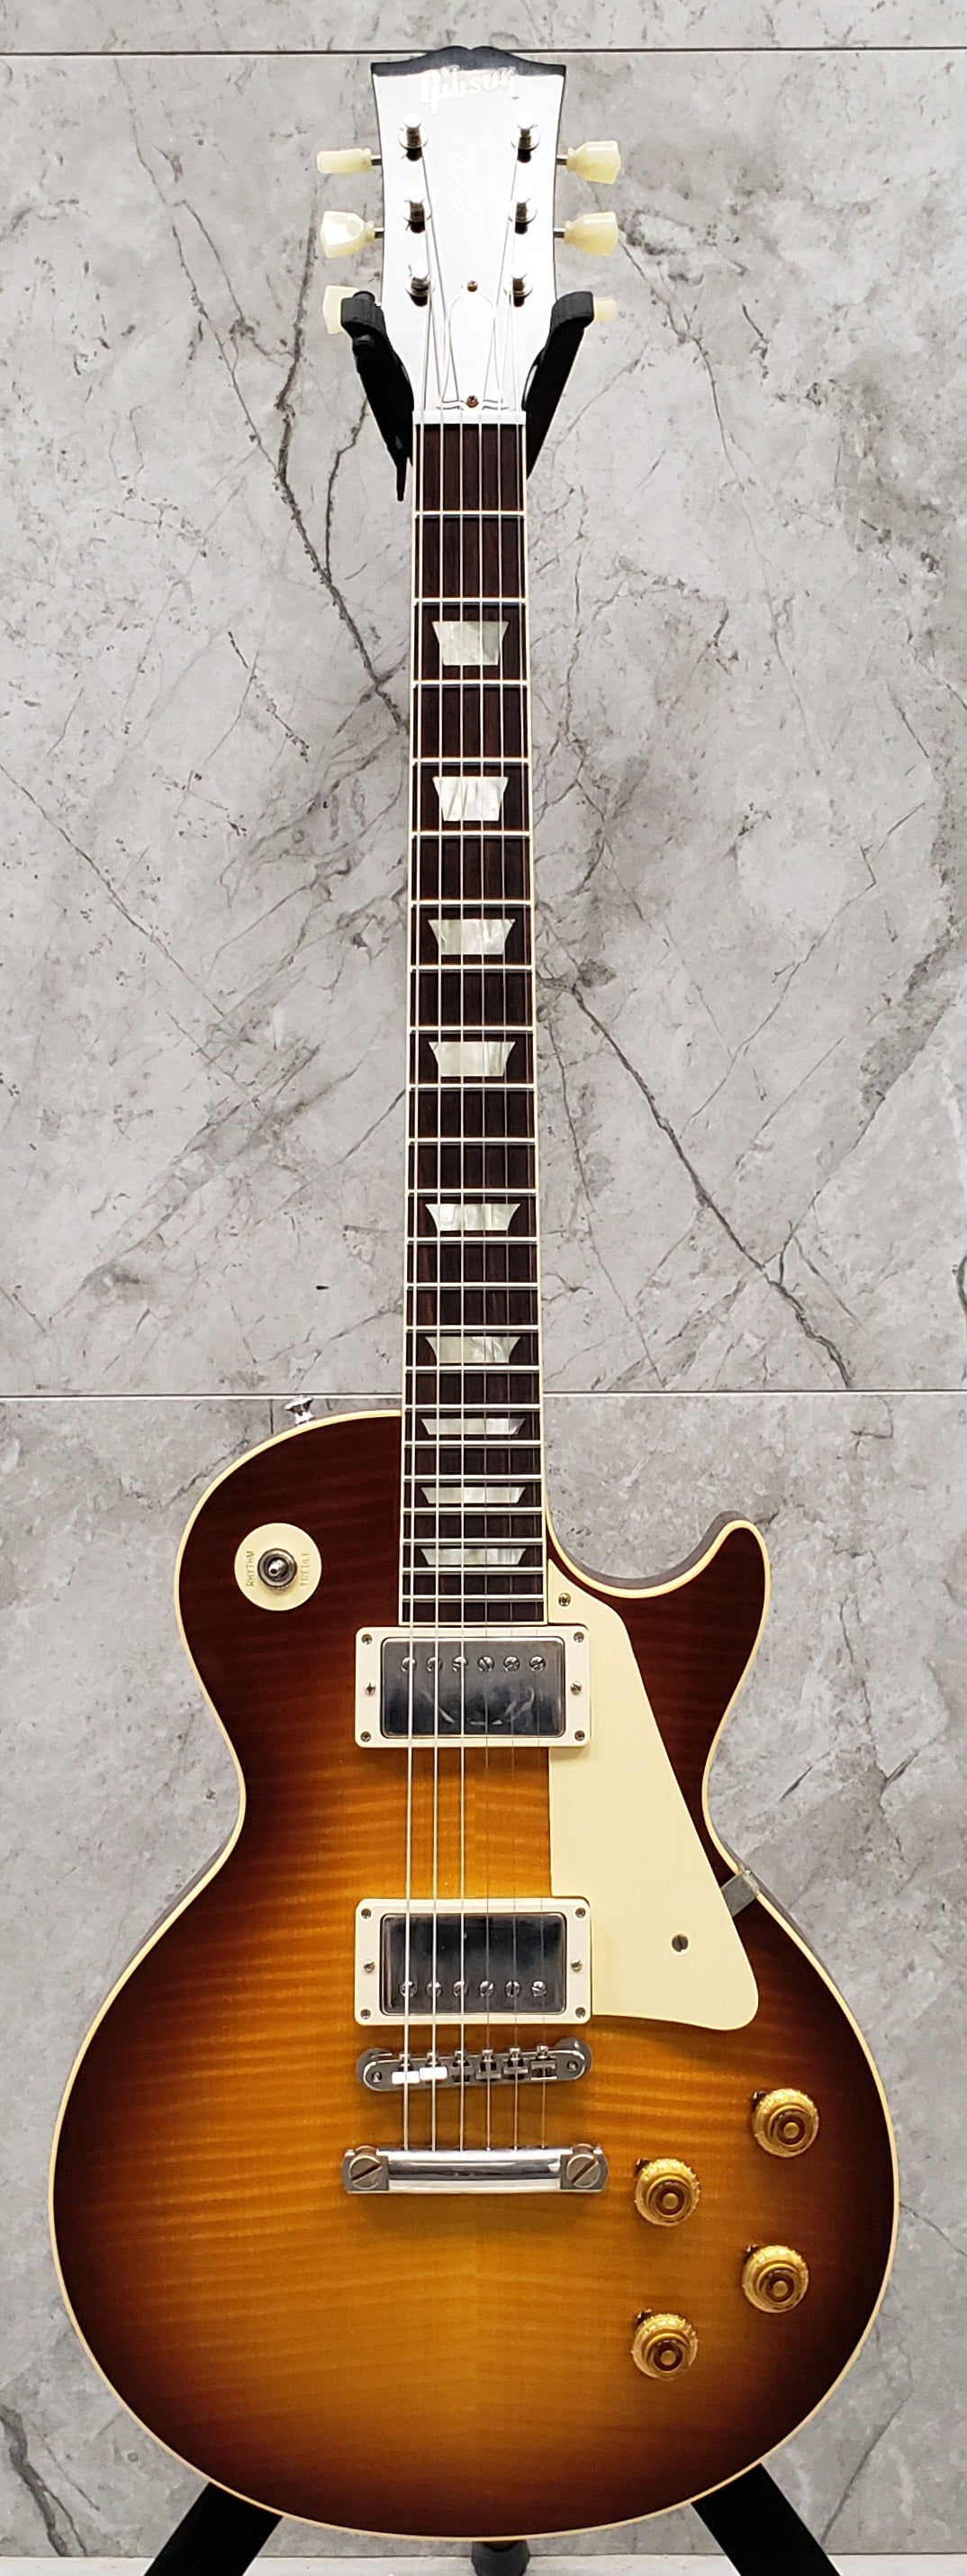 Gibson Custom Shop 1959 Les Paul Standard Reissue VOS Iced Tea LPR59VOITNH SERIAL NUMBER 901724